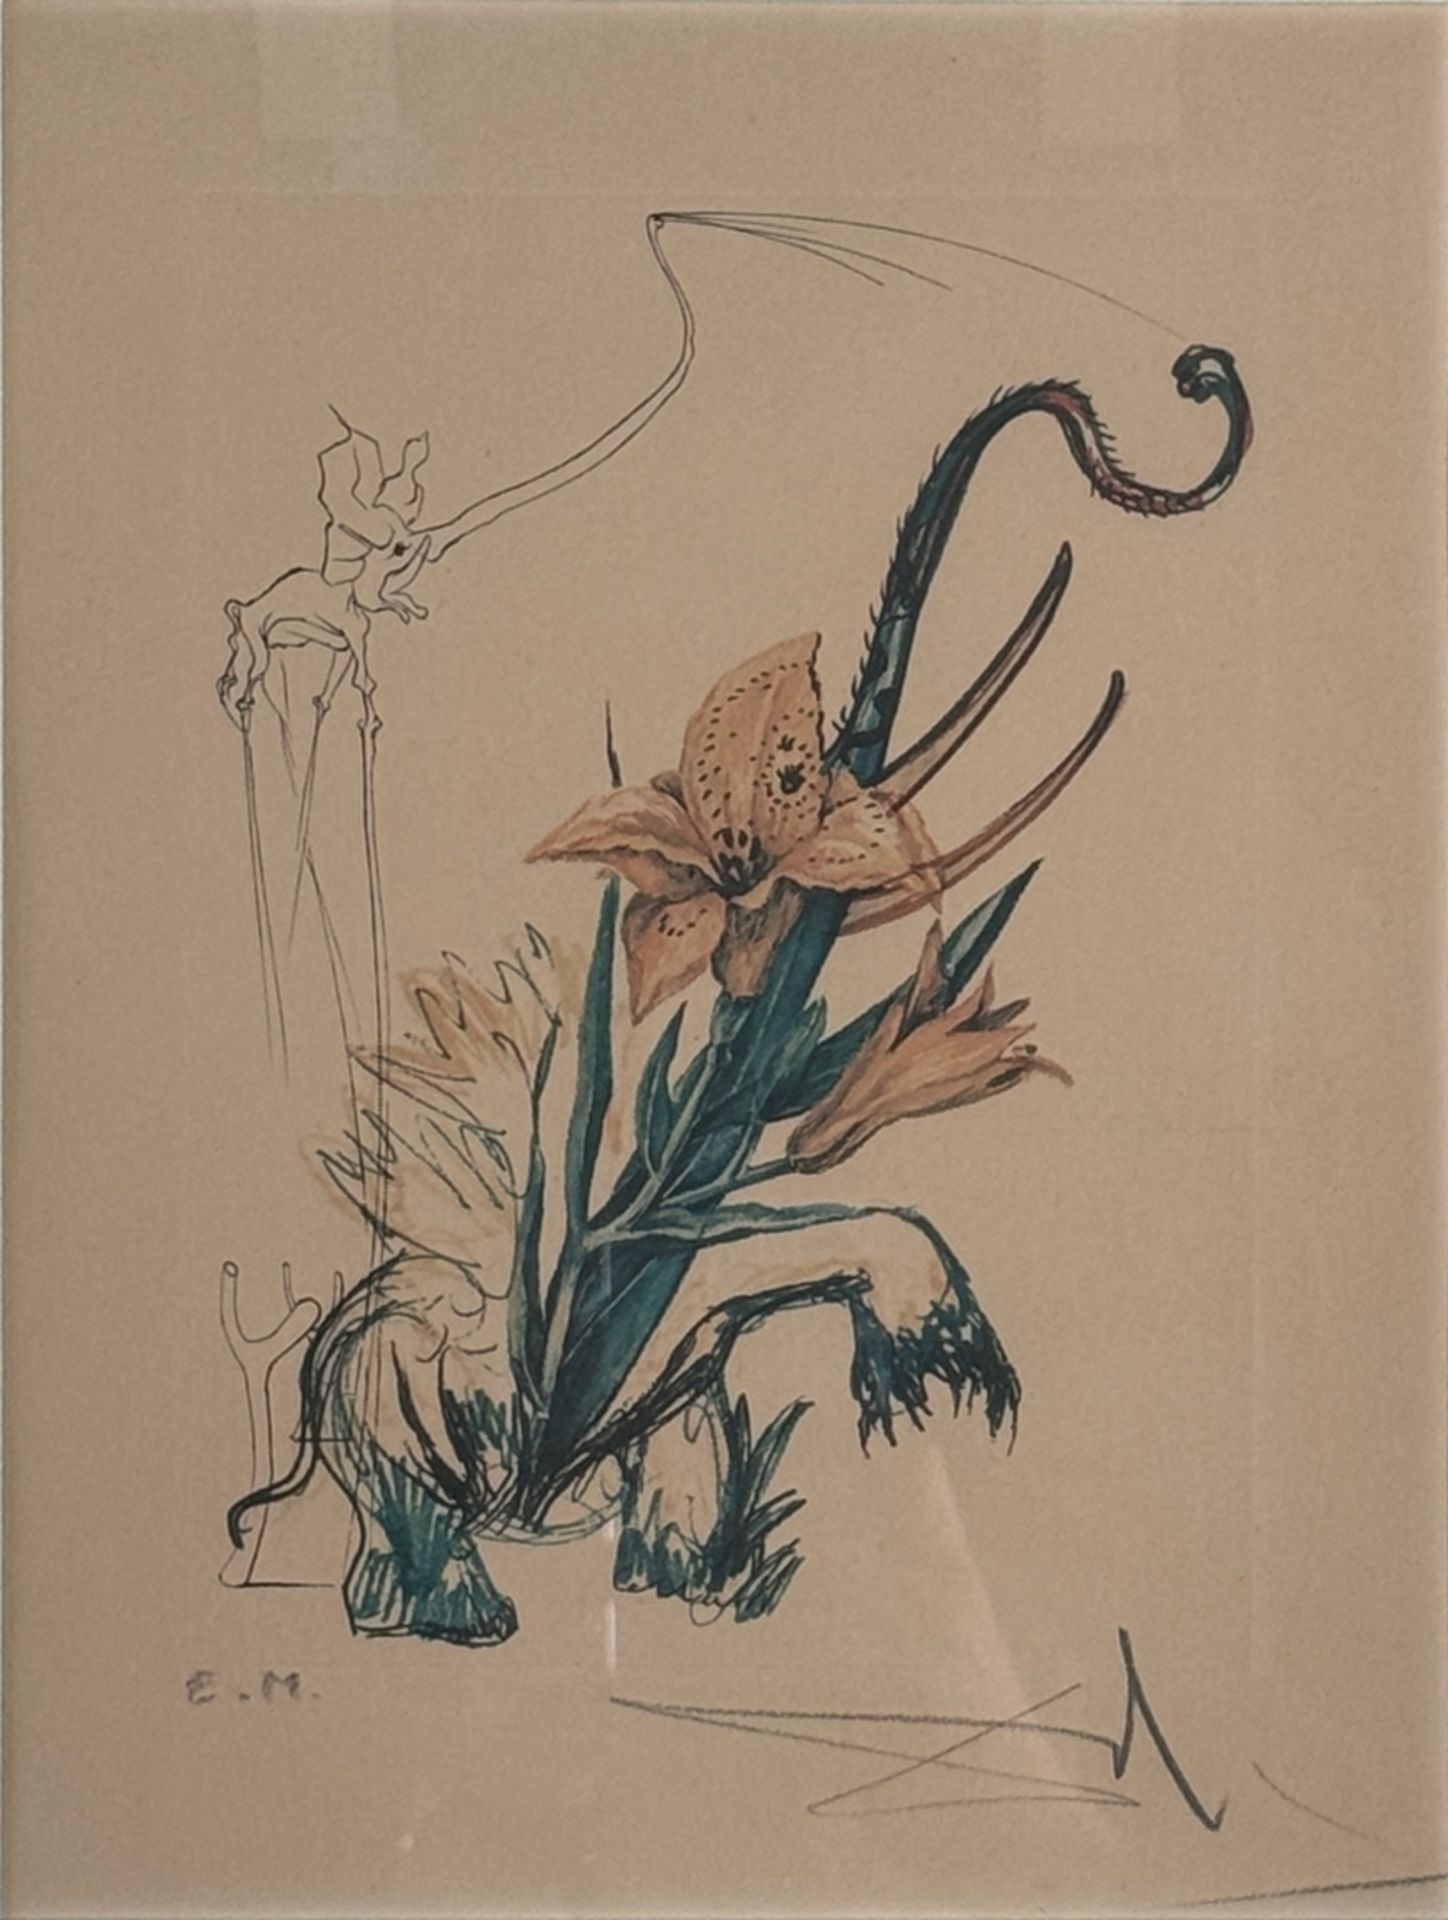 Dali, Salvador (1904 - 1989 Figueres) "Hemerocallis thumbergii elephanter furiosa", from the series